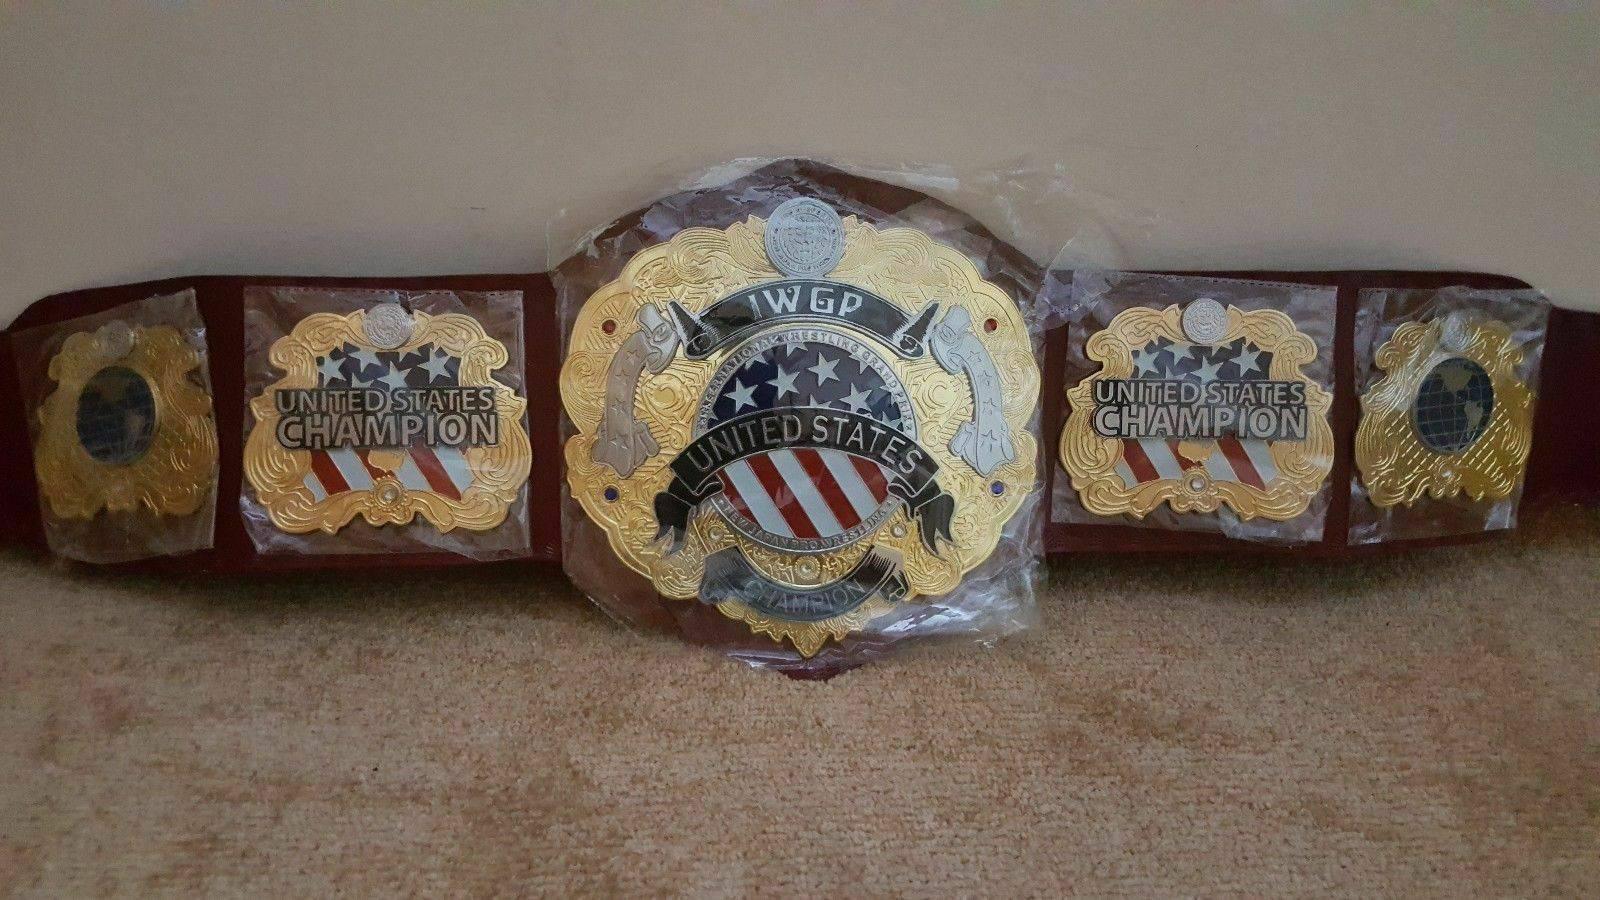 IWGP UNITED STATES DOUBLE STACKED Championship Belt - Zees Belts